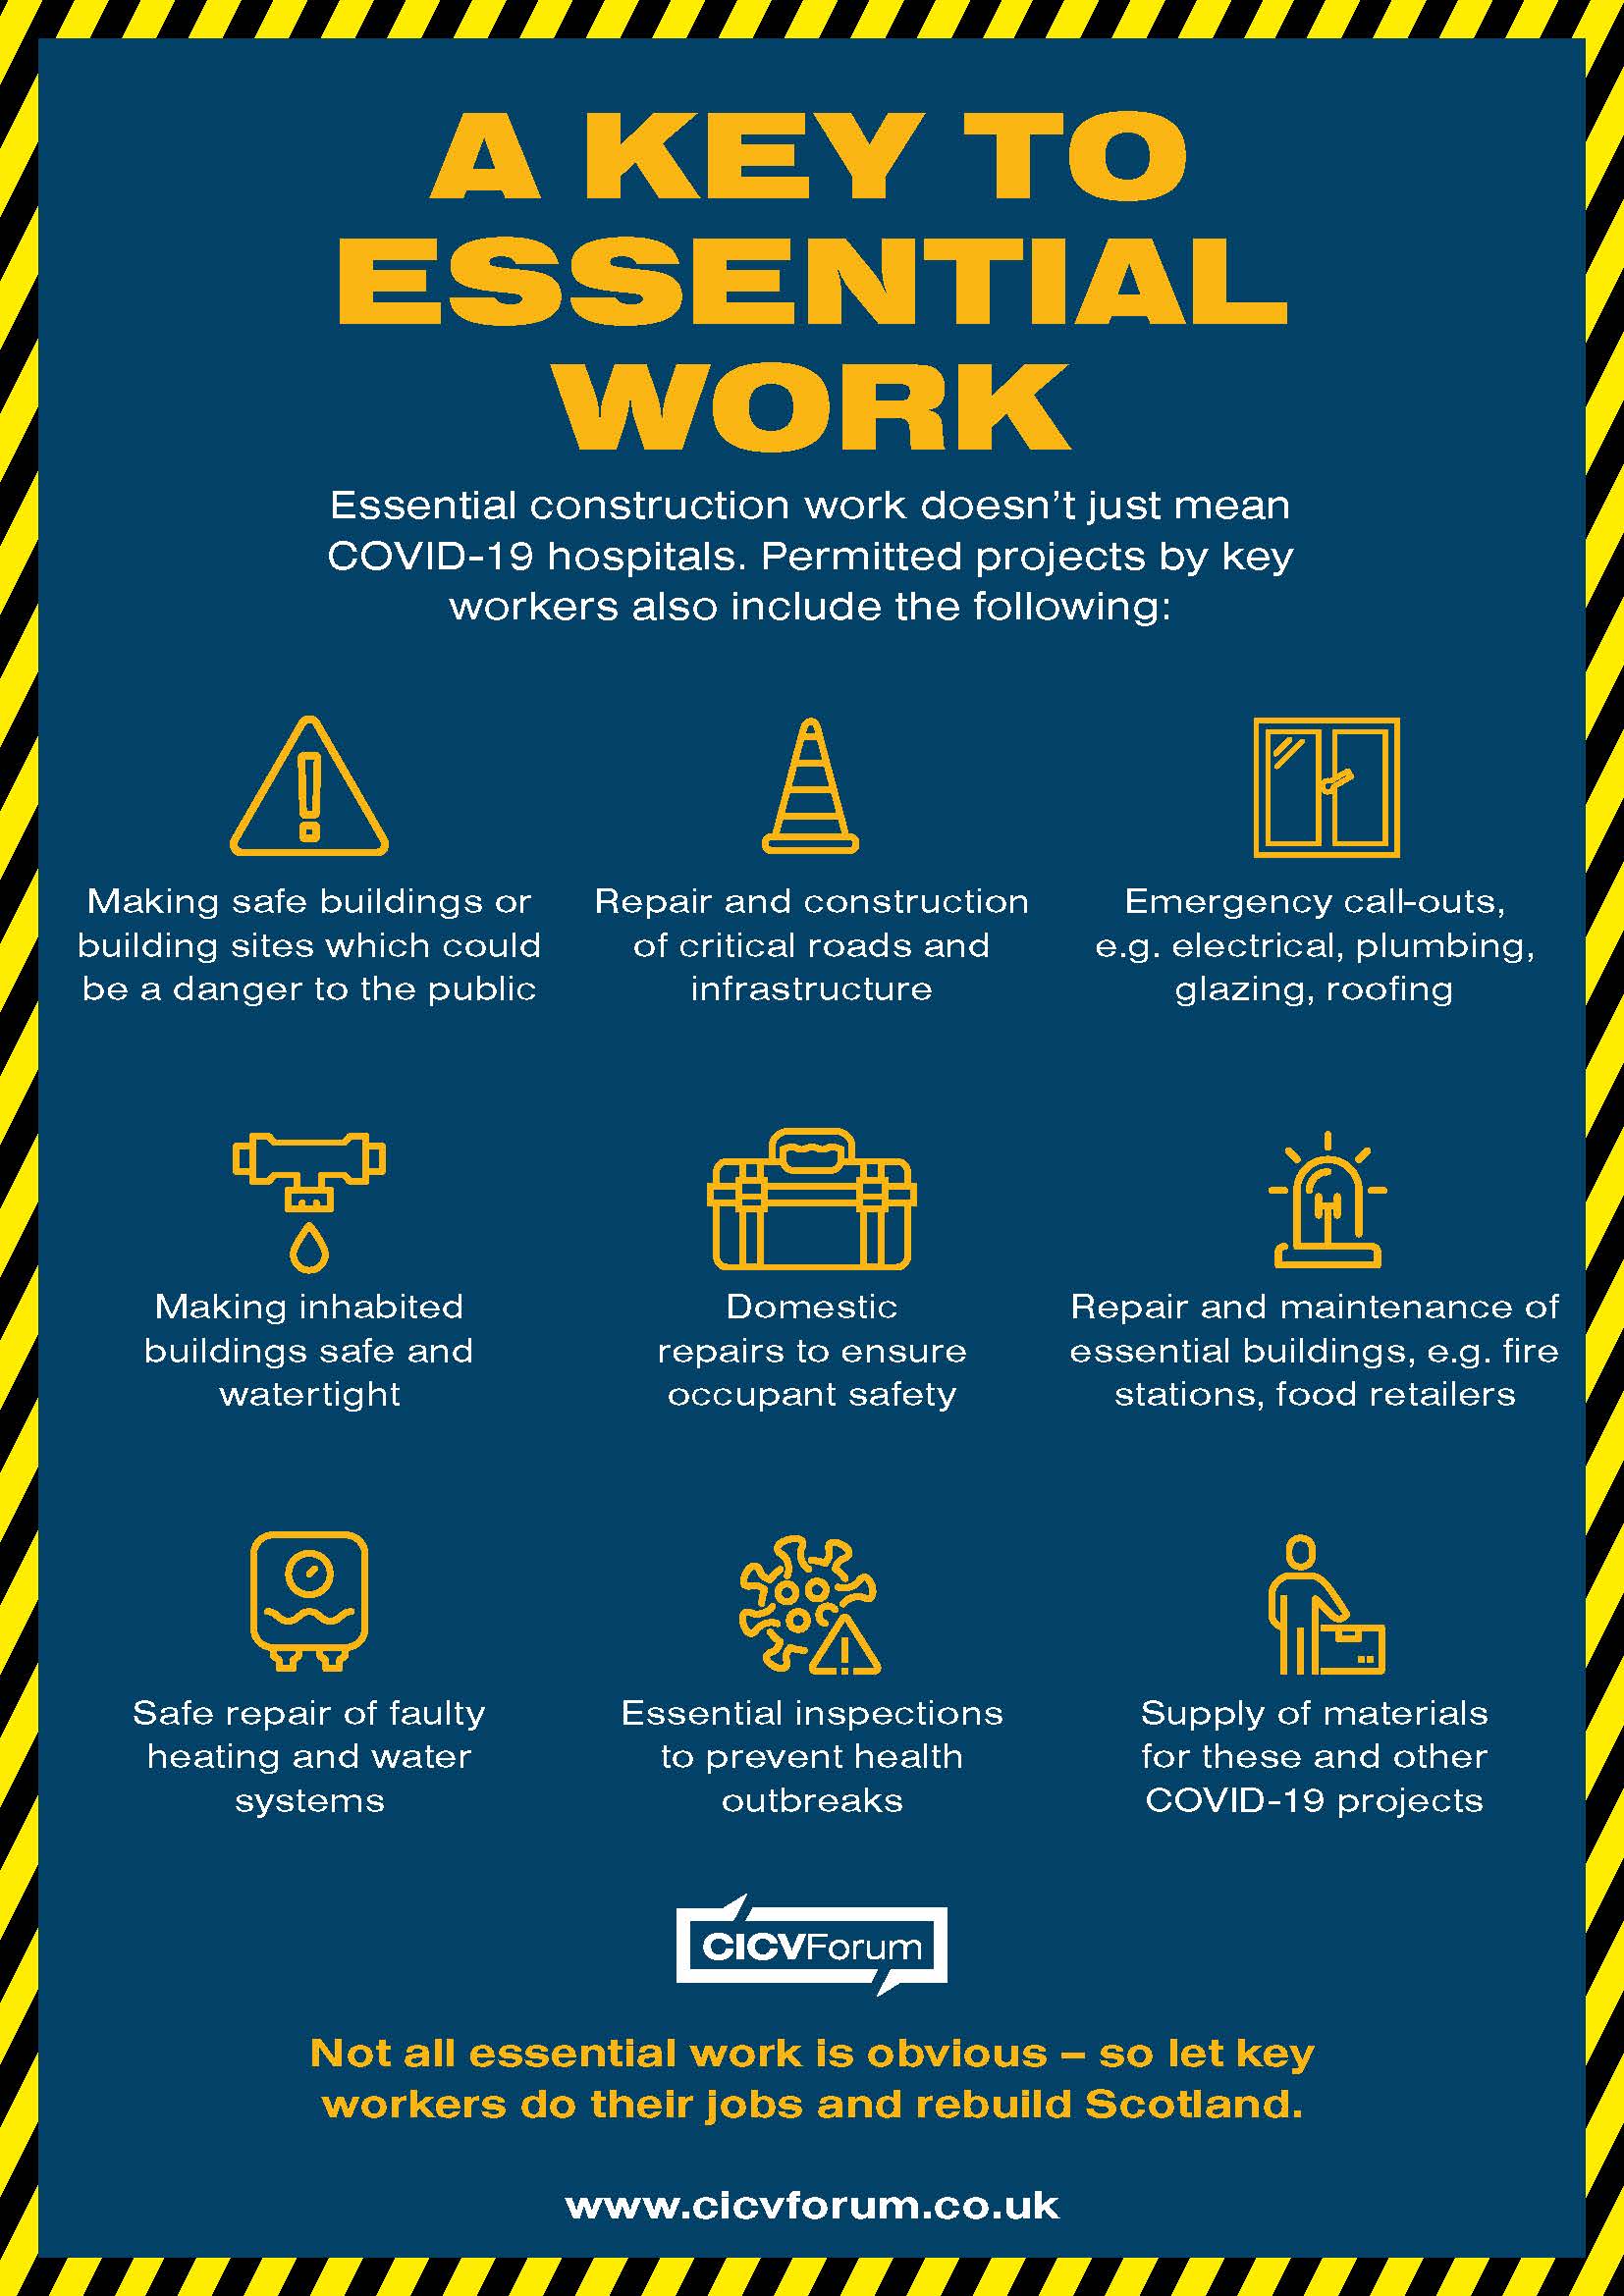 CICV Forum infographic offers key to understanding essential work